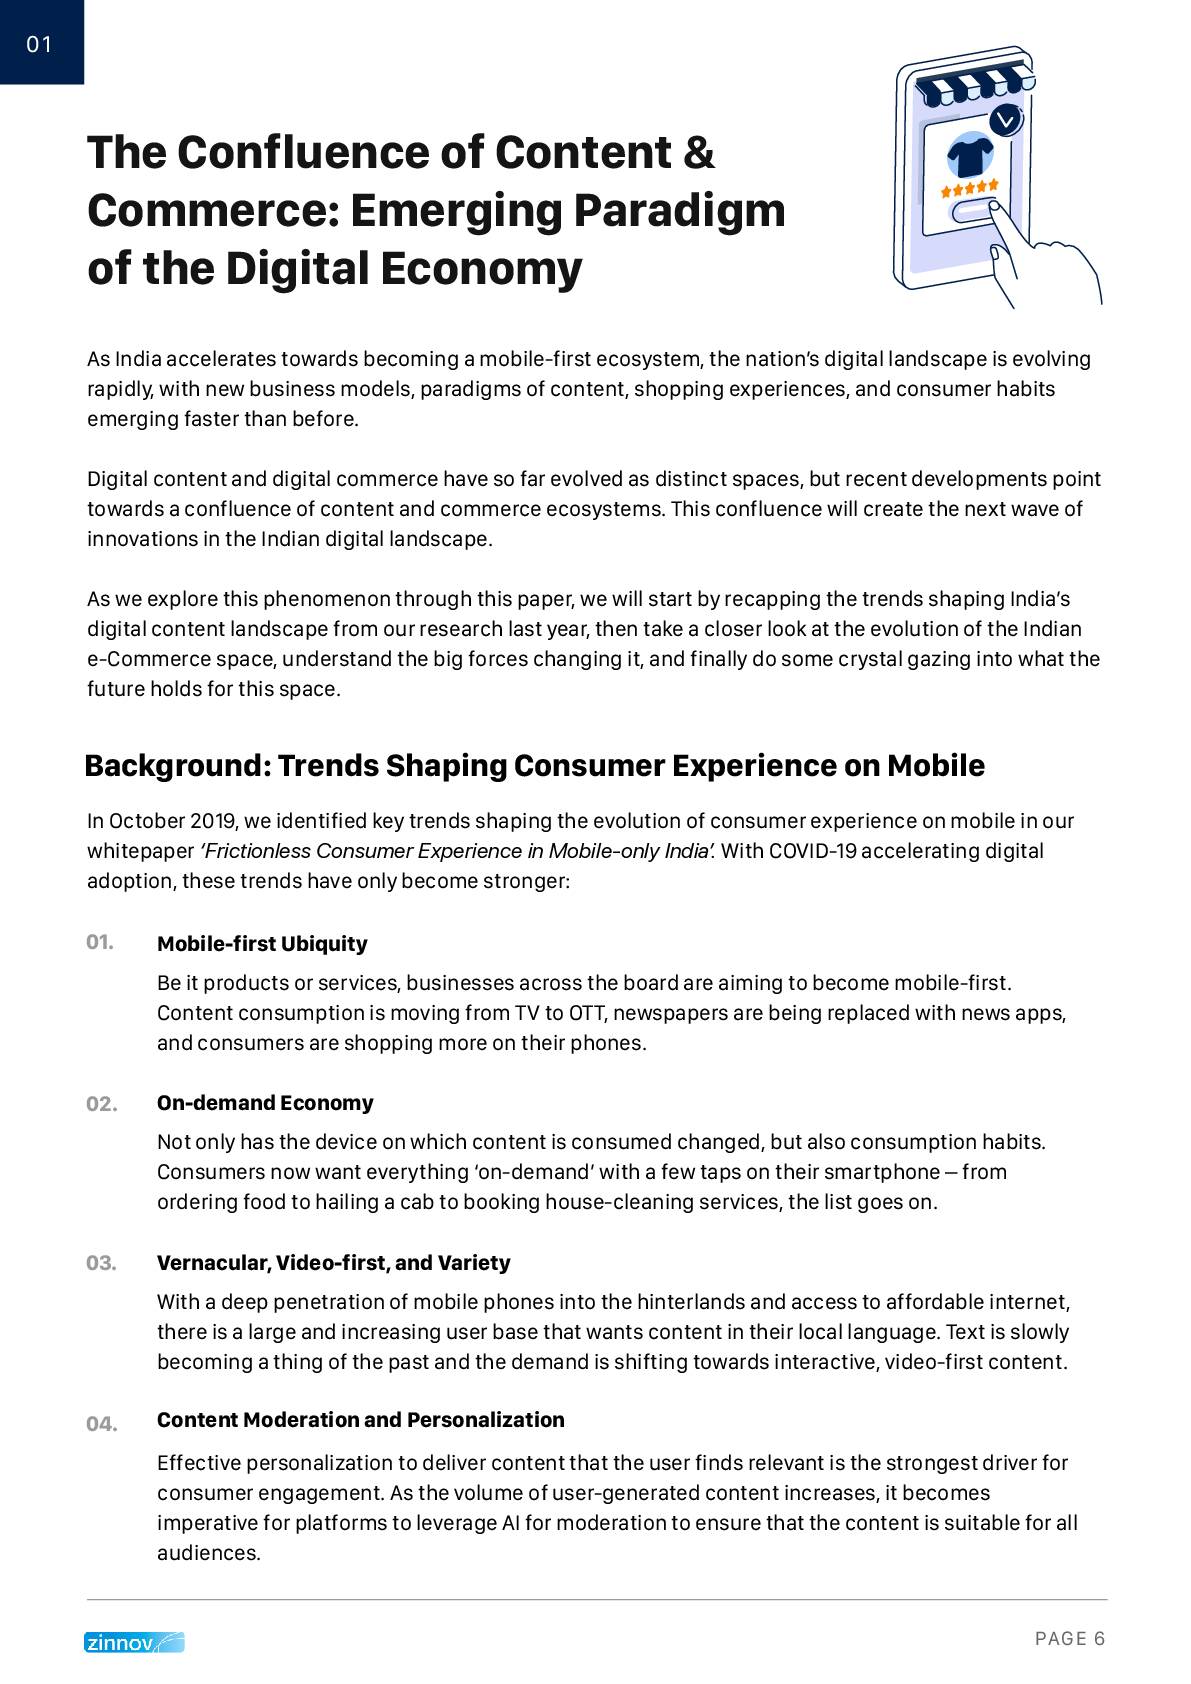 Zinnov Study Whats Shaping Indias Digital Economy6